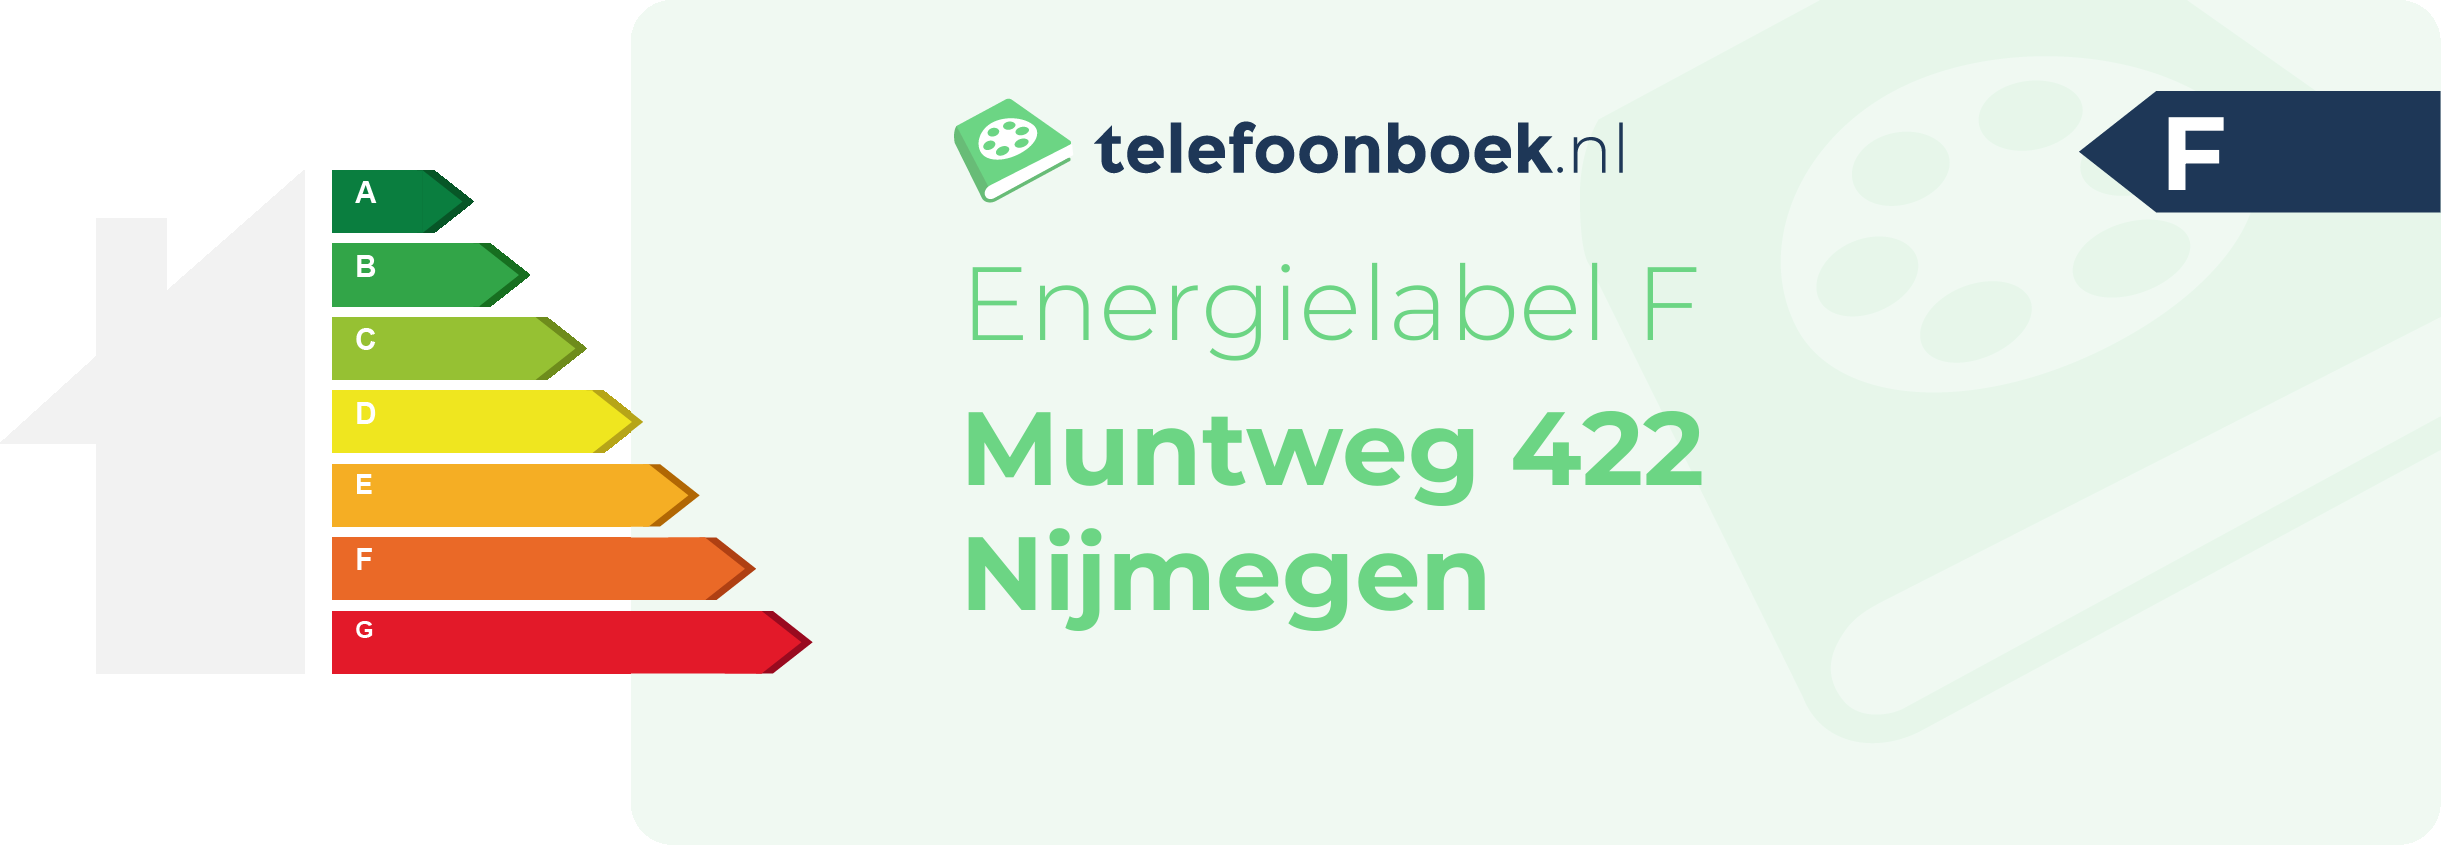 Energielabel Muntweg 422 Nijmegen